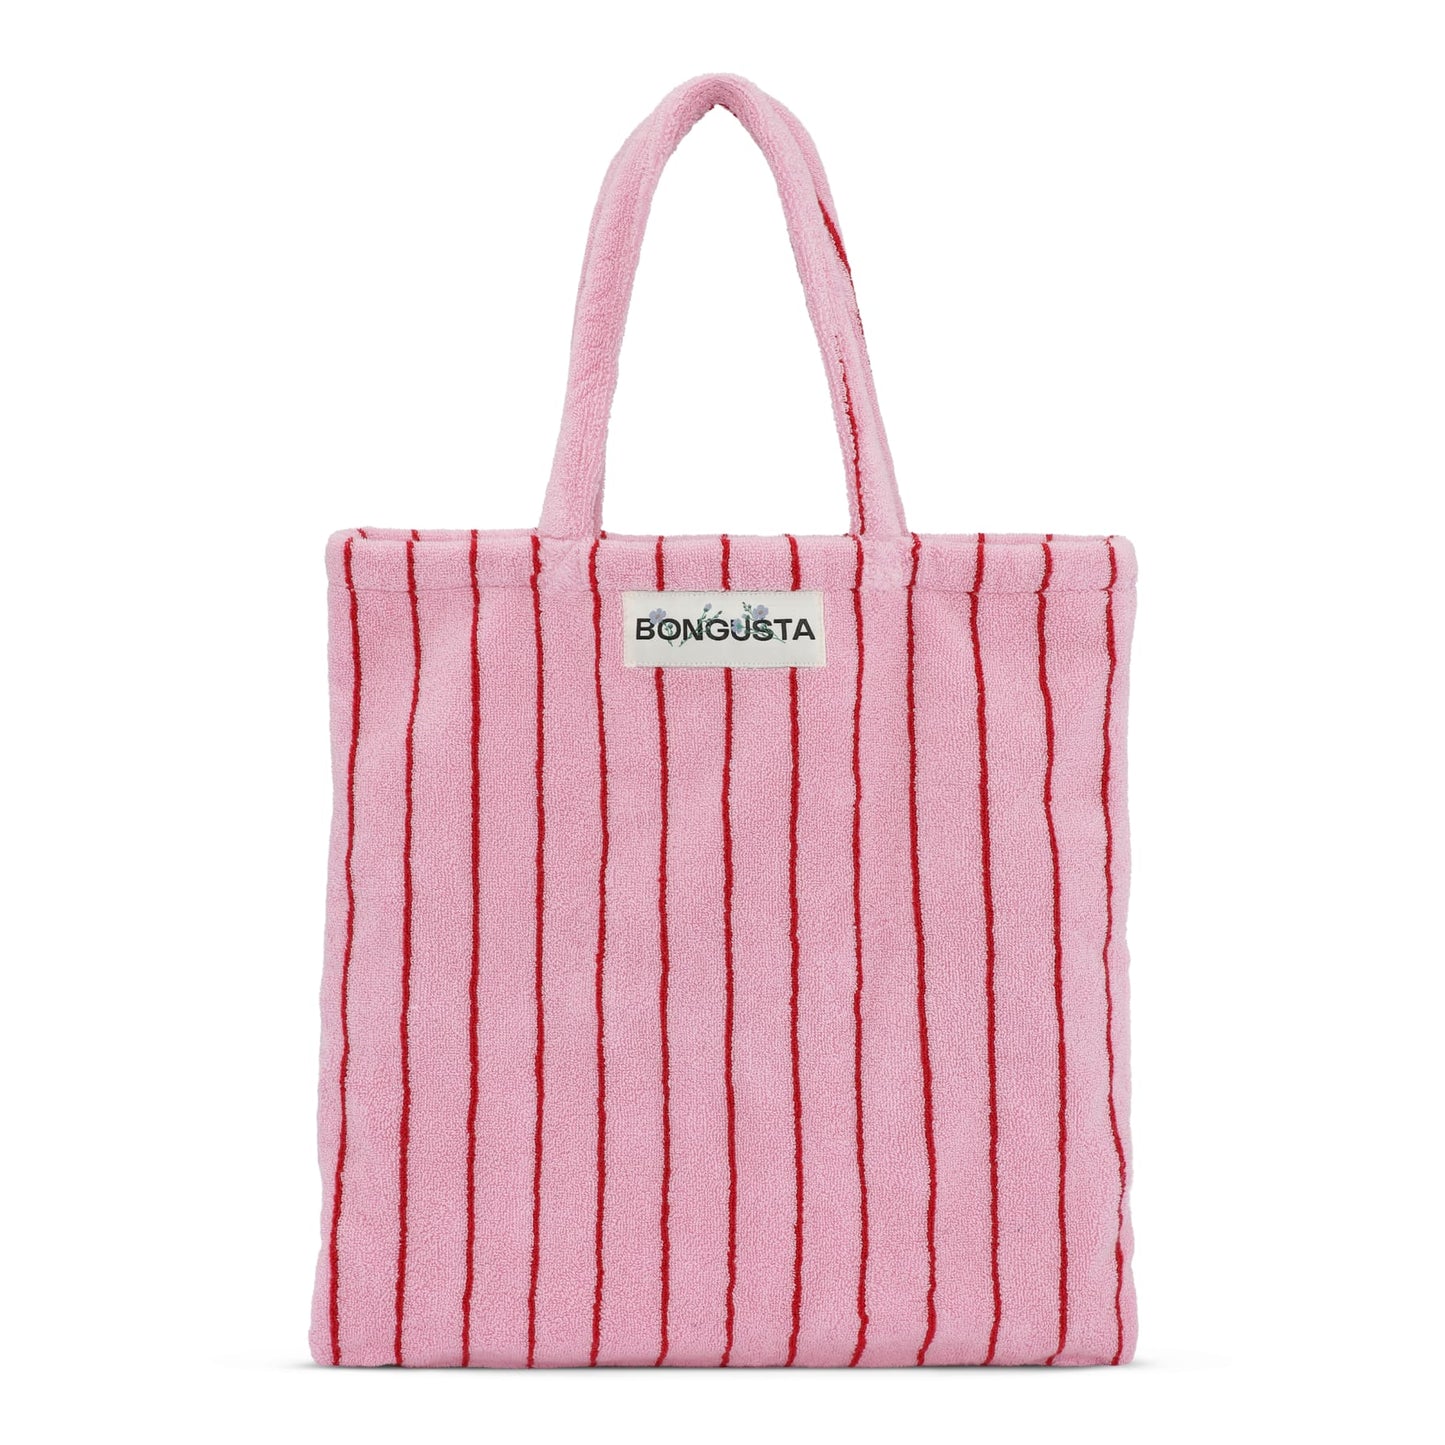 Bongusta Tote Bag Pink - Filurfifi